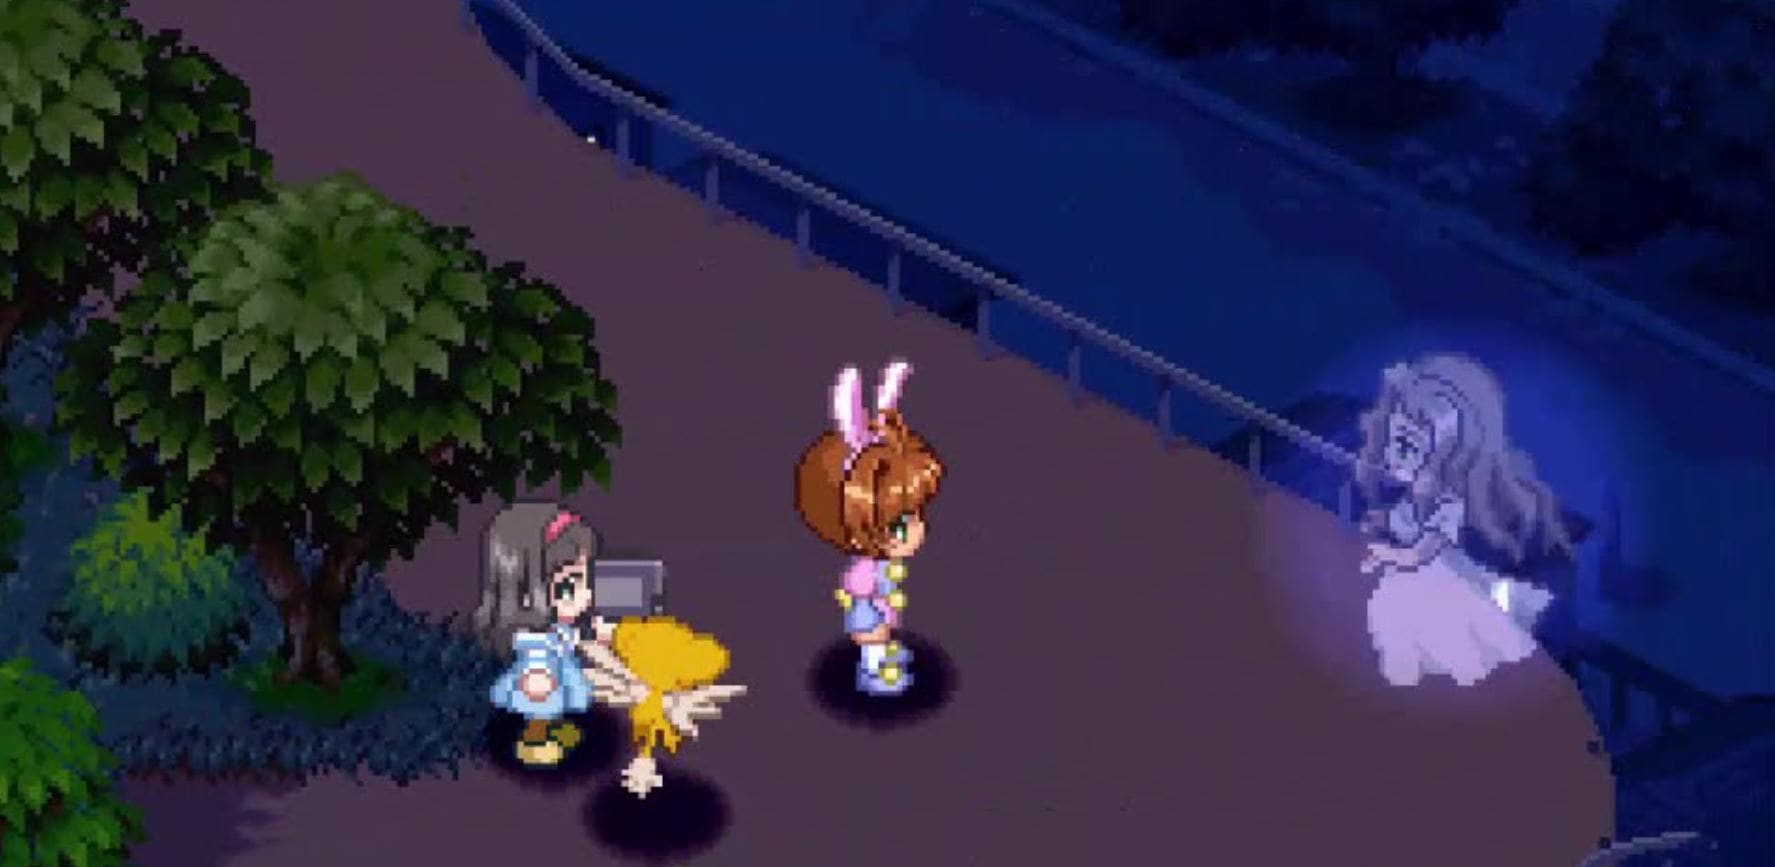 Cardcaptor Sakura: Animetic Story Game Screenshots - Neoseeker